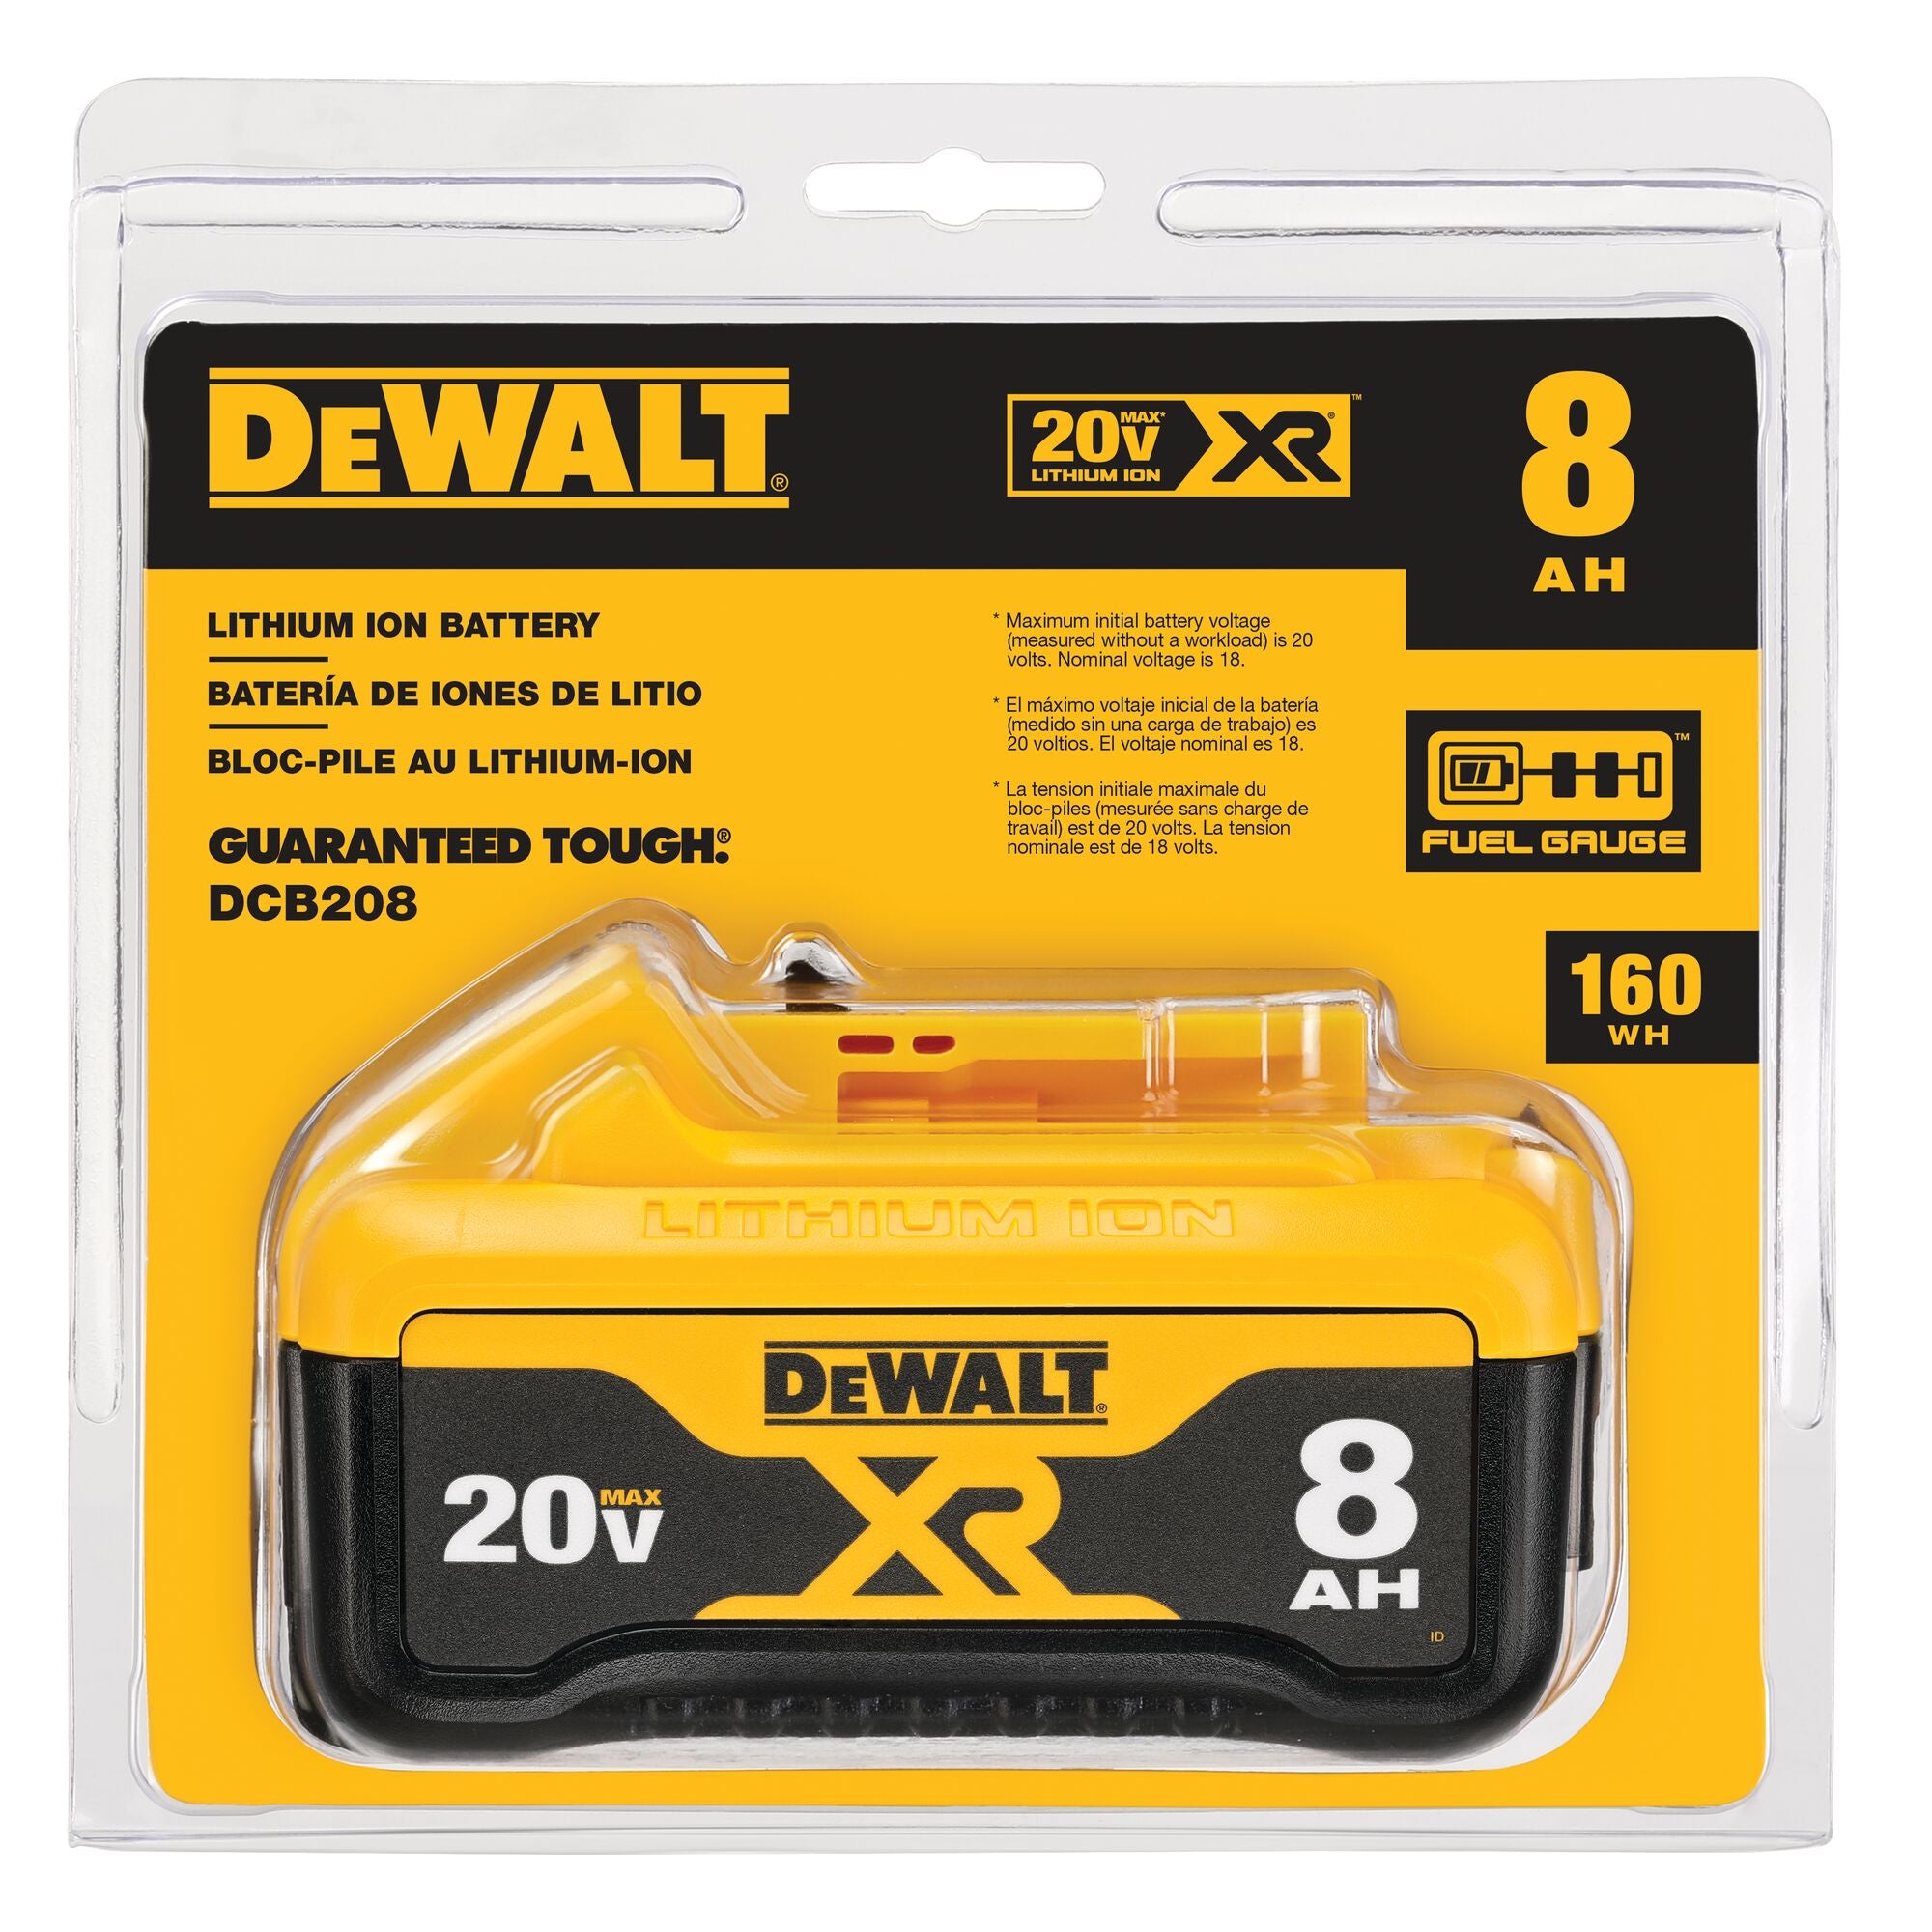 DEWALT DCB208 20V MAX XR Lithium-Ion 8.0AH Battery